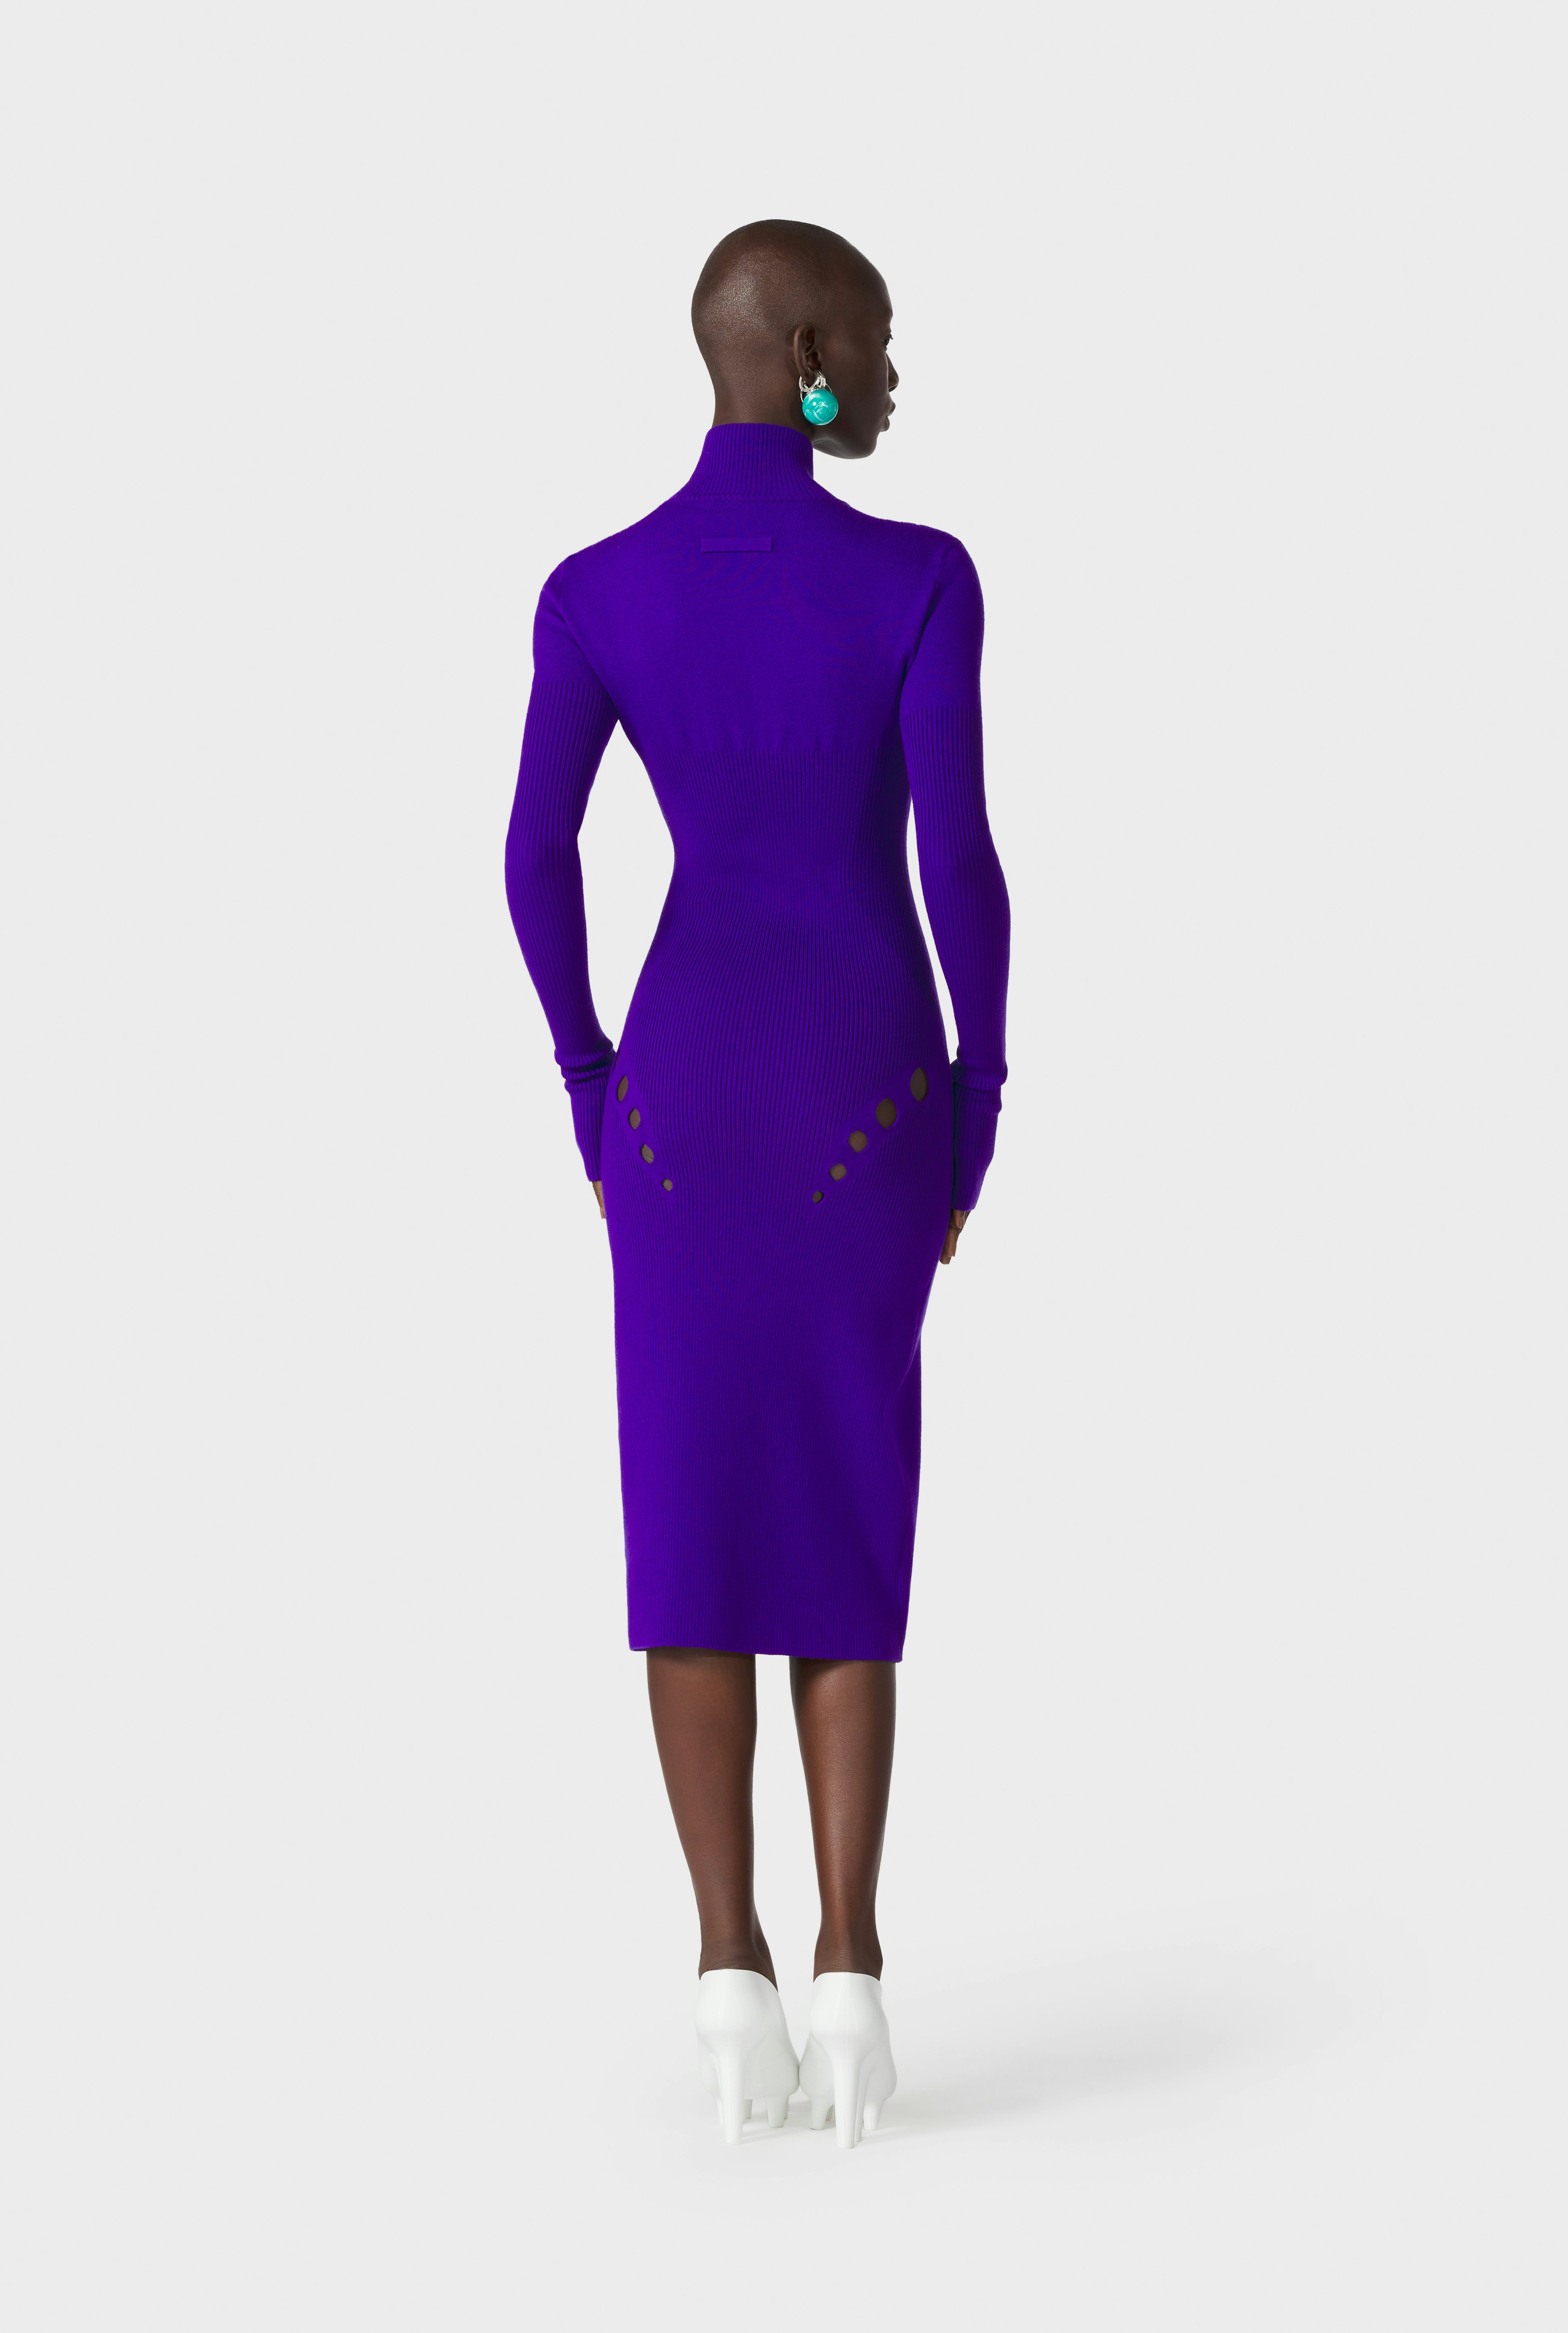 The Purple Openworked Knit Dress 